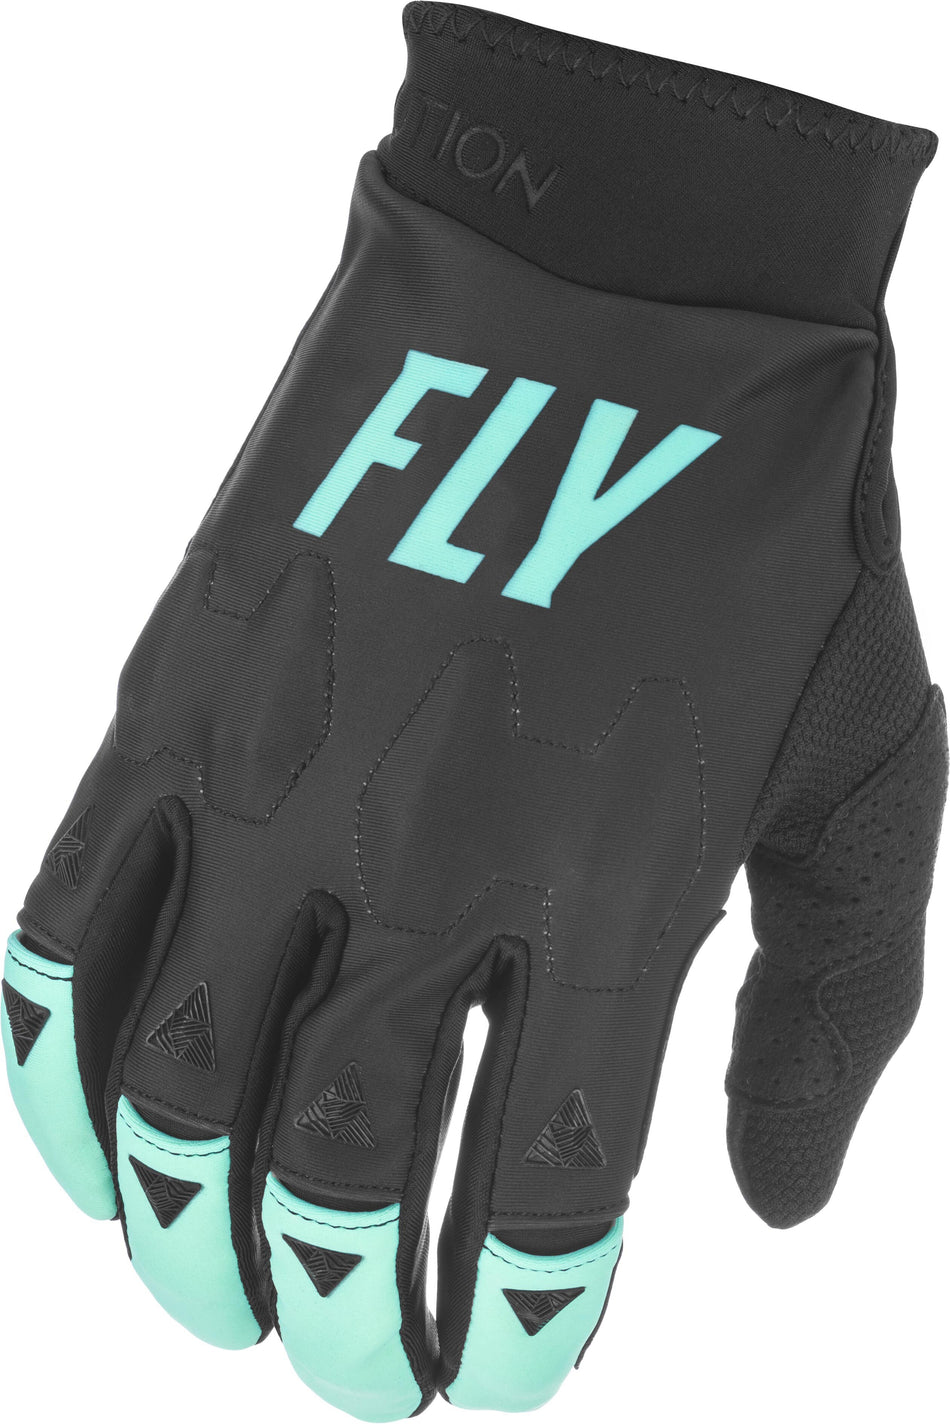 FLY RACING Evolution Dst L.E. Gloves Mint/Black Sz 07 374-11907